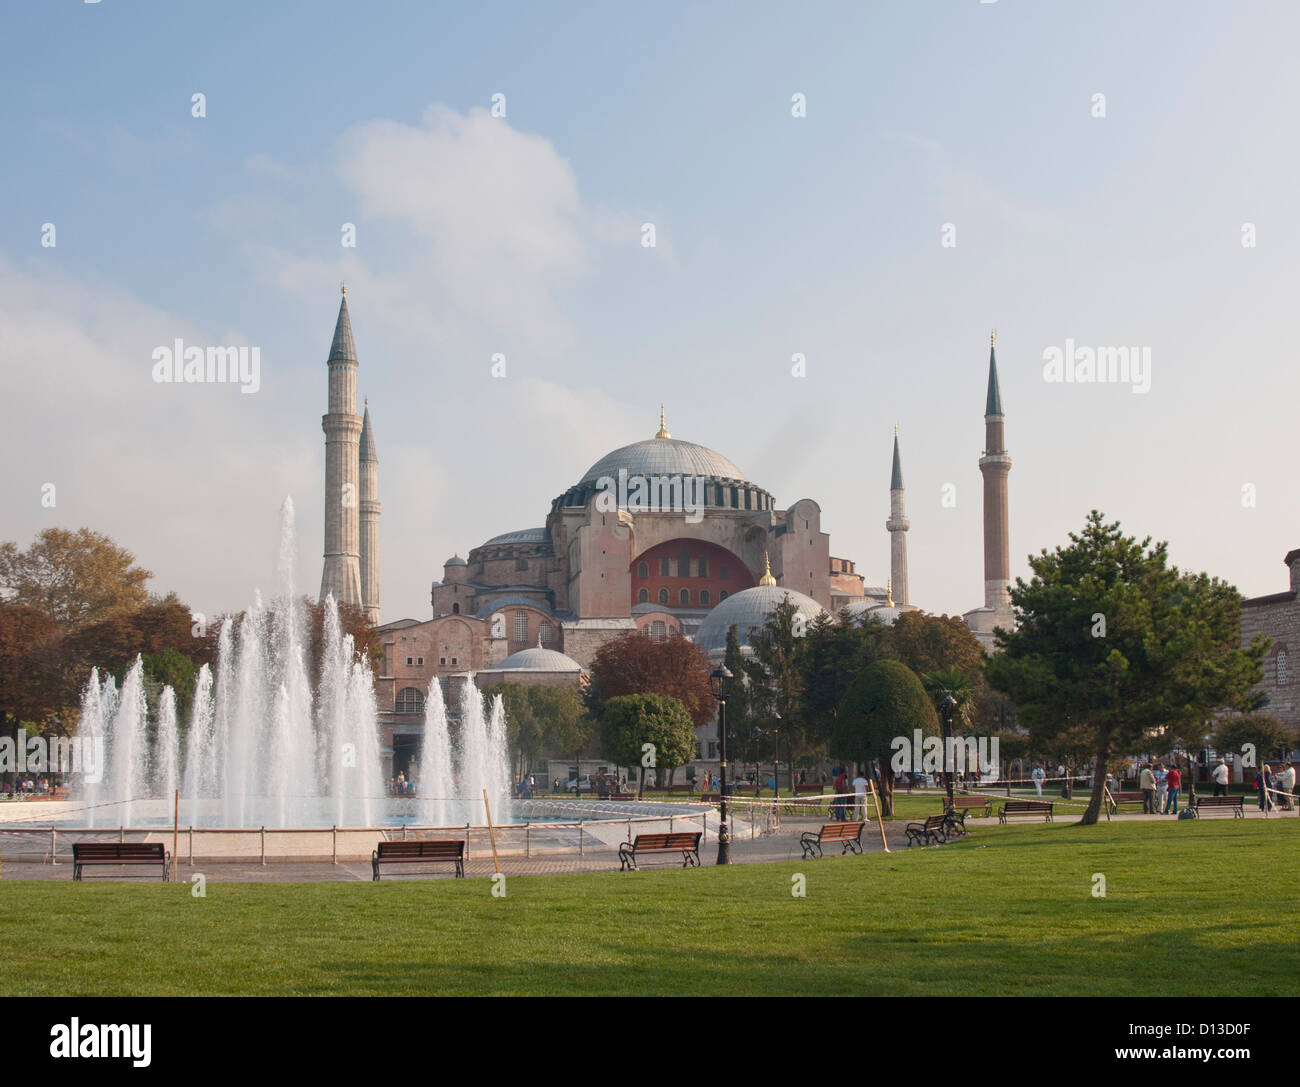 Aya Sofia moschea / chiesa in Istanbul con fontana e parco verde Foto Stock